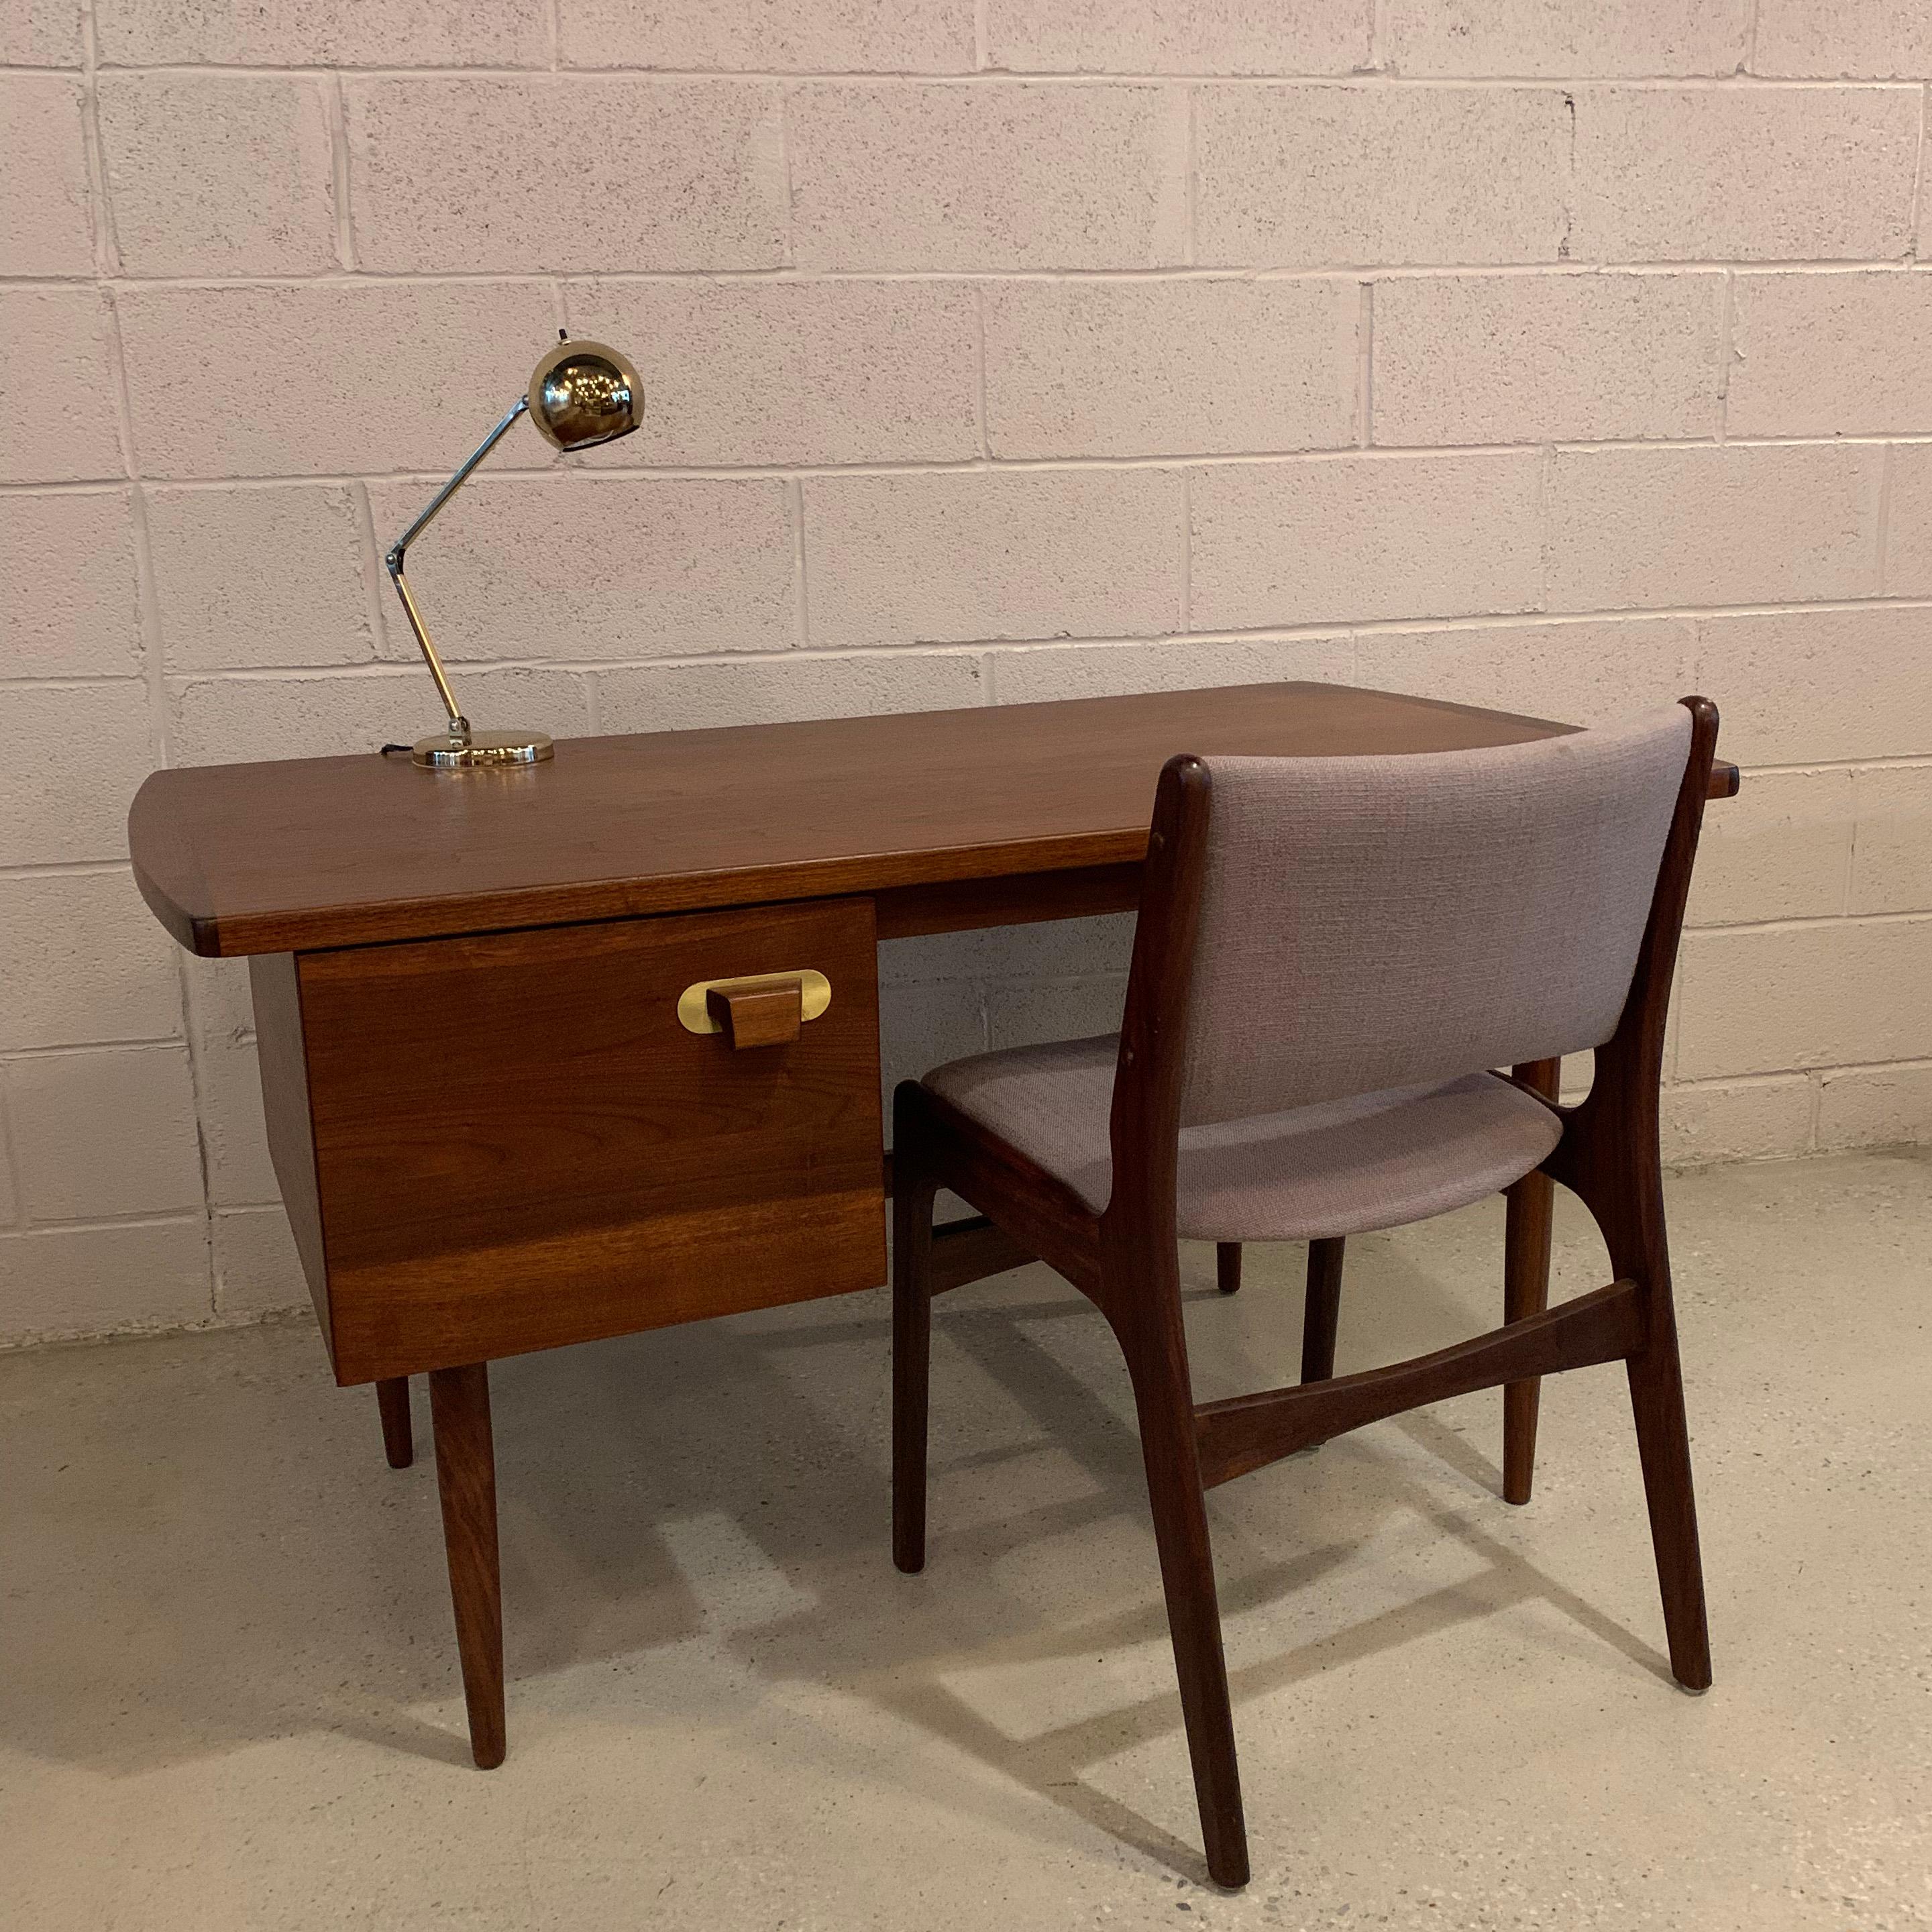 20th Century Mid-Century Modern Walnut and Brass Desk by Jens Risom